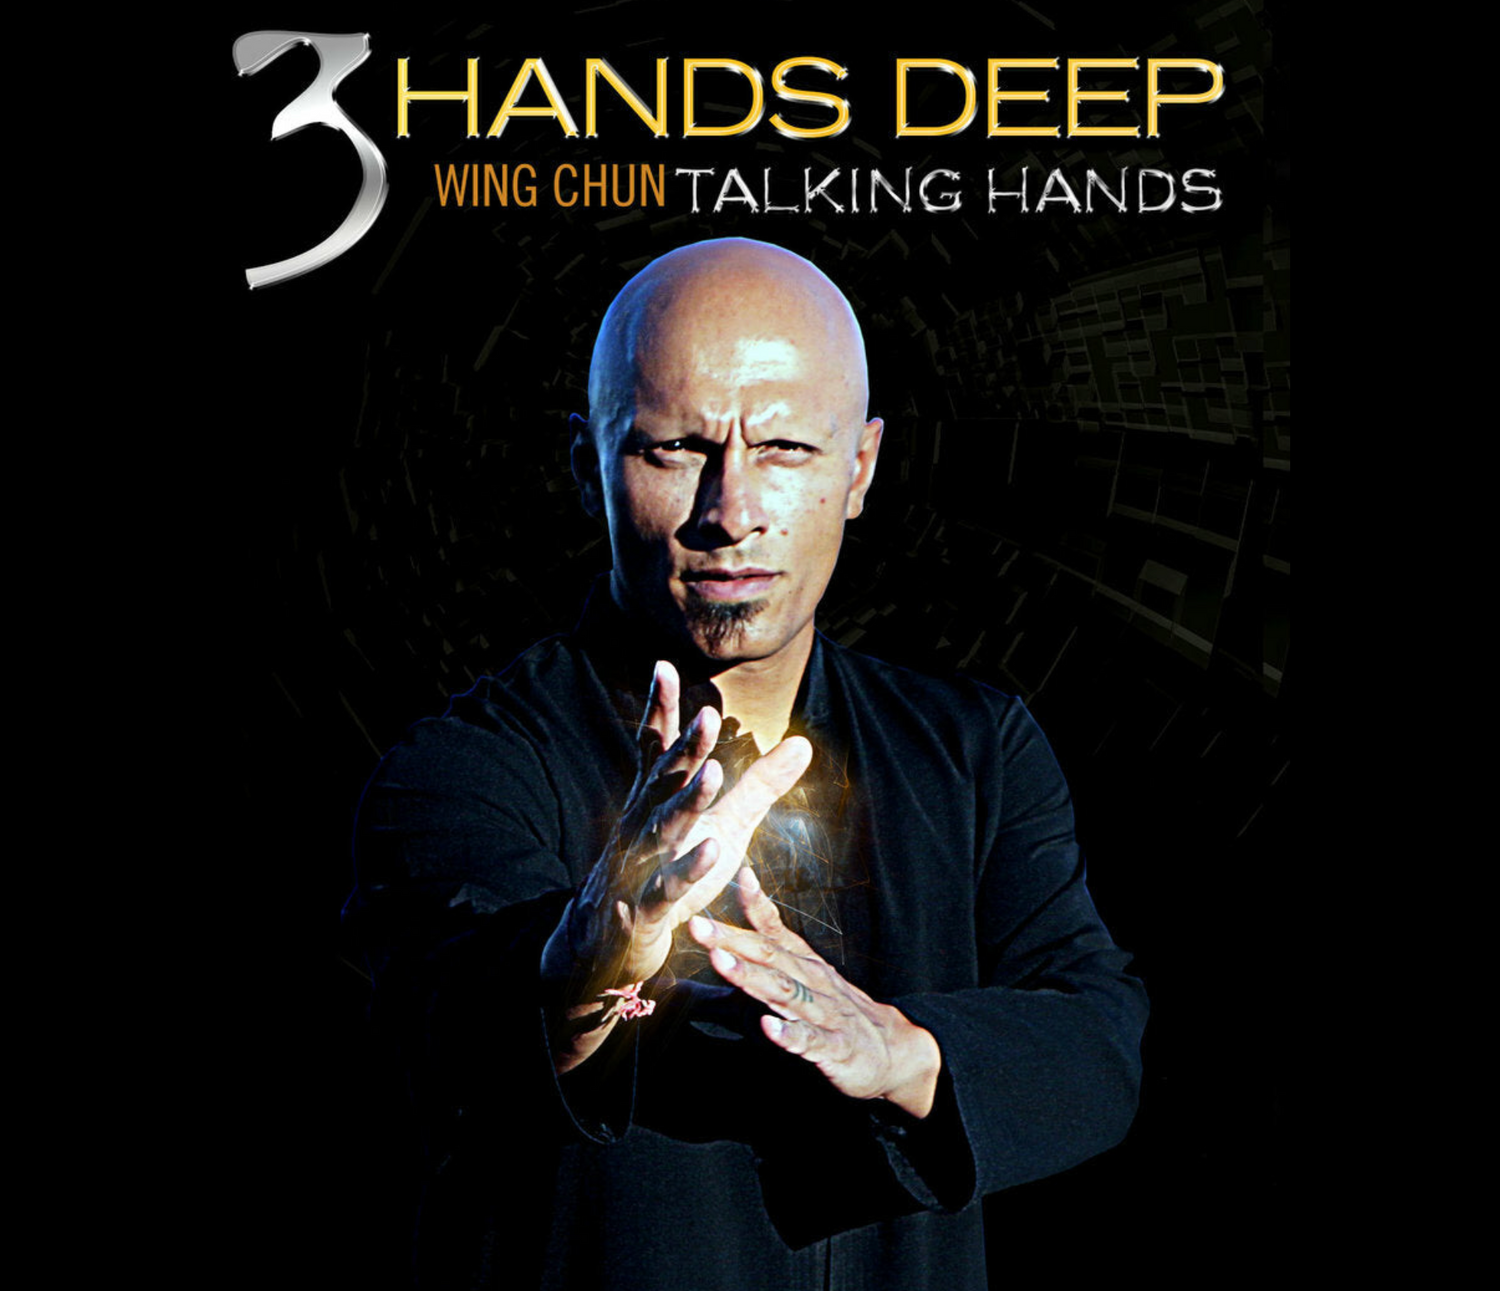 3 Hands Deep: 詠春拳トーキングハンズ 3 巻セット (オンデマンド)